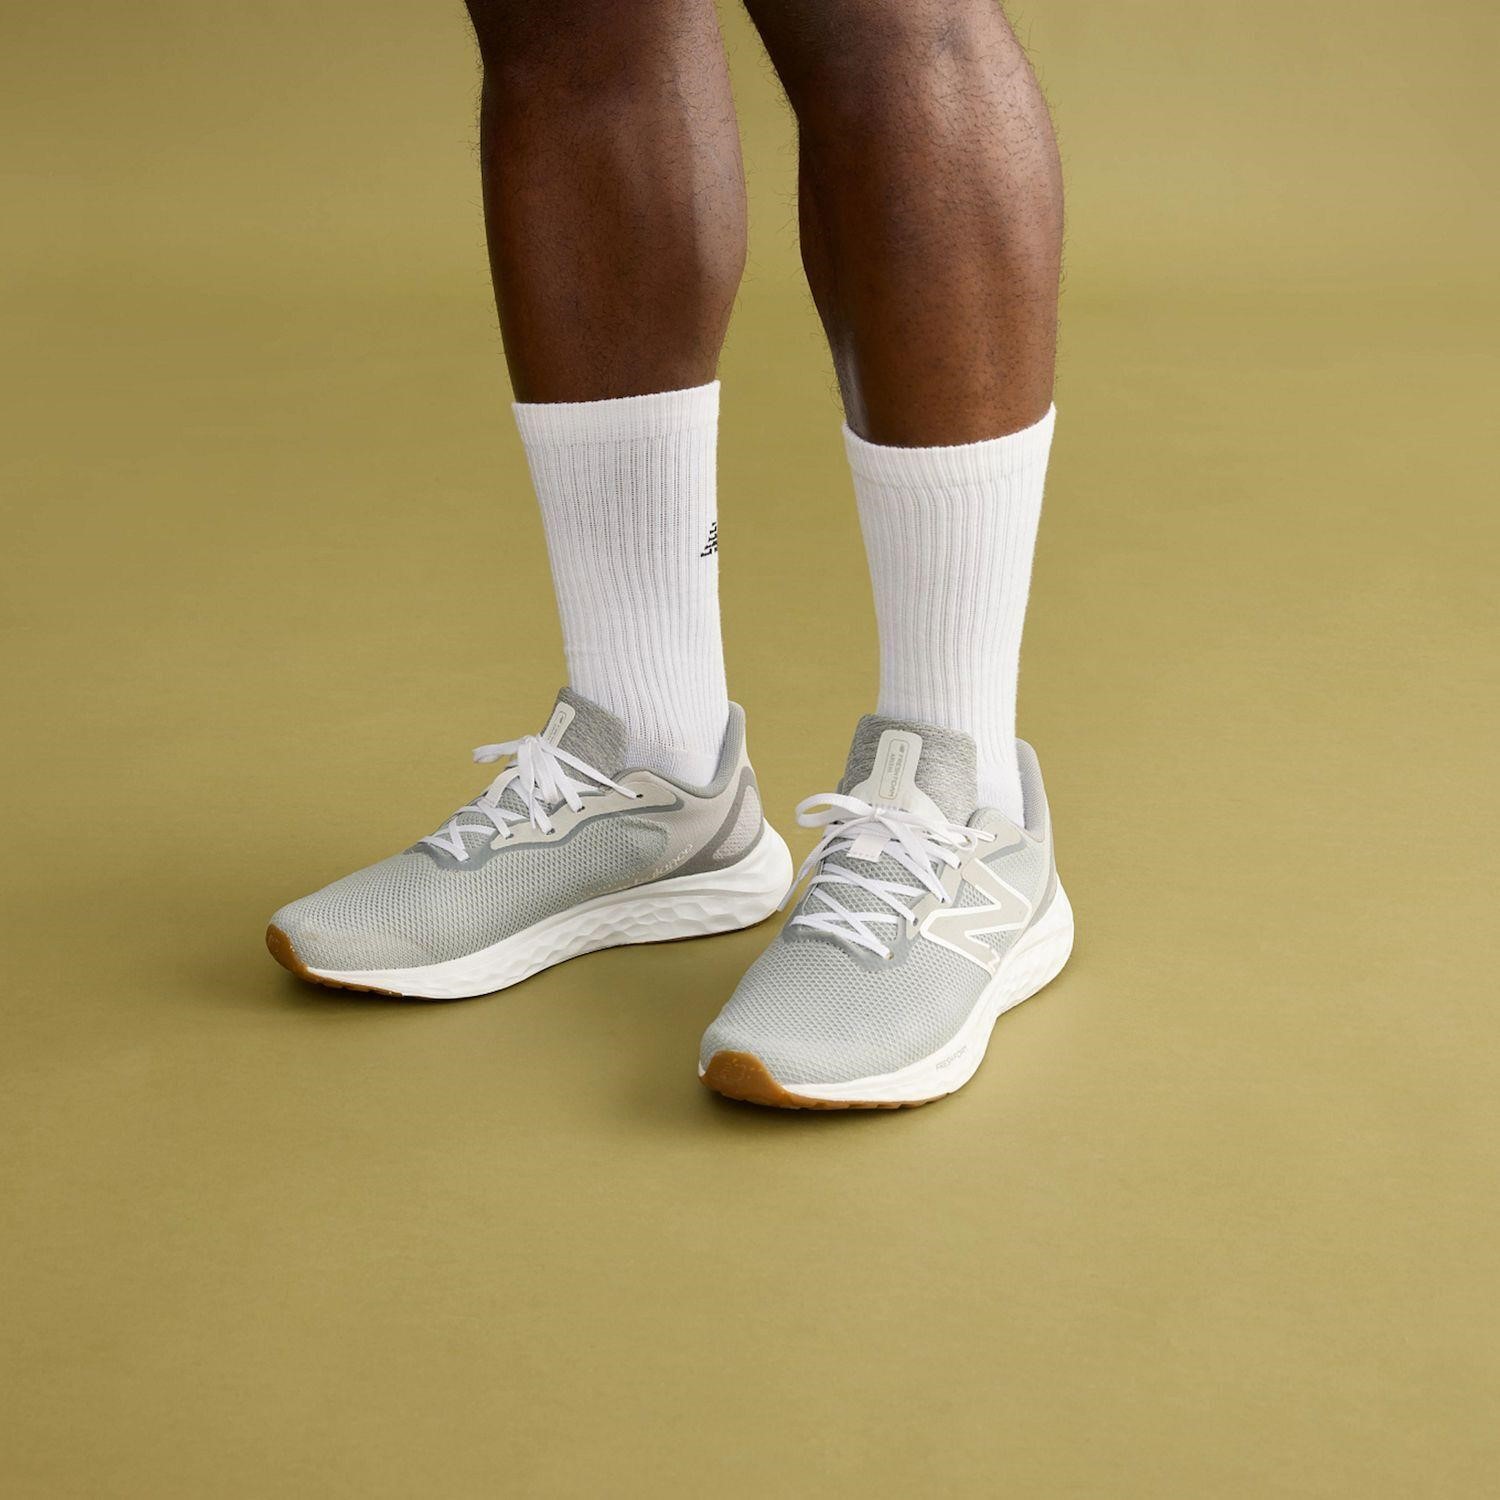 New Balance Arishi v4 Men's Running Shoes White